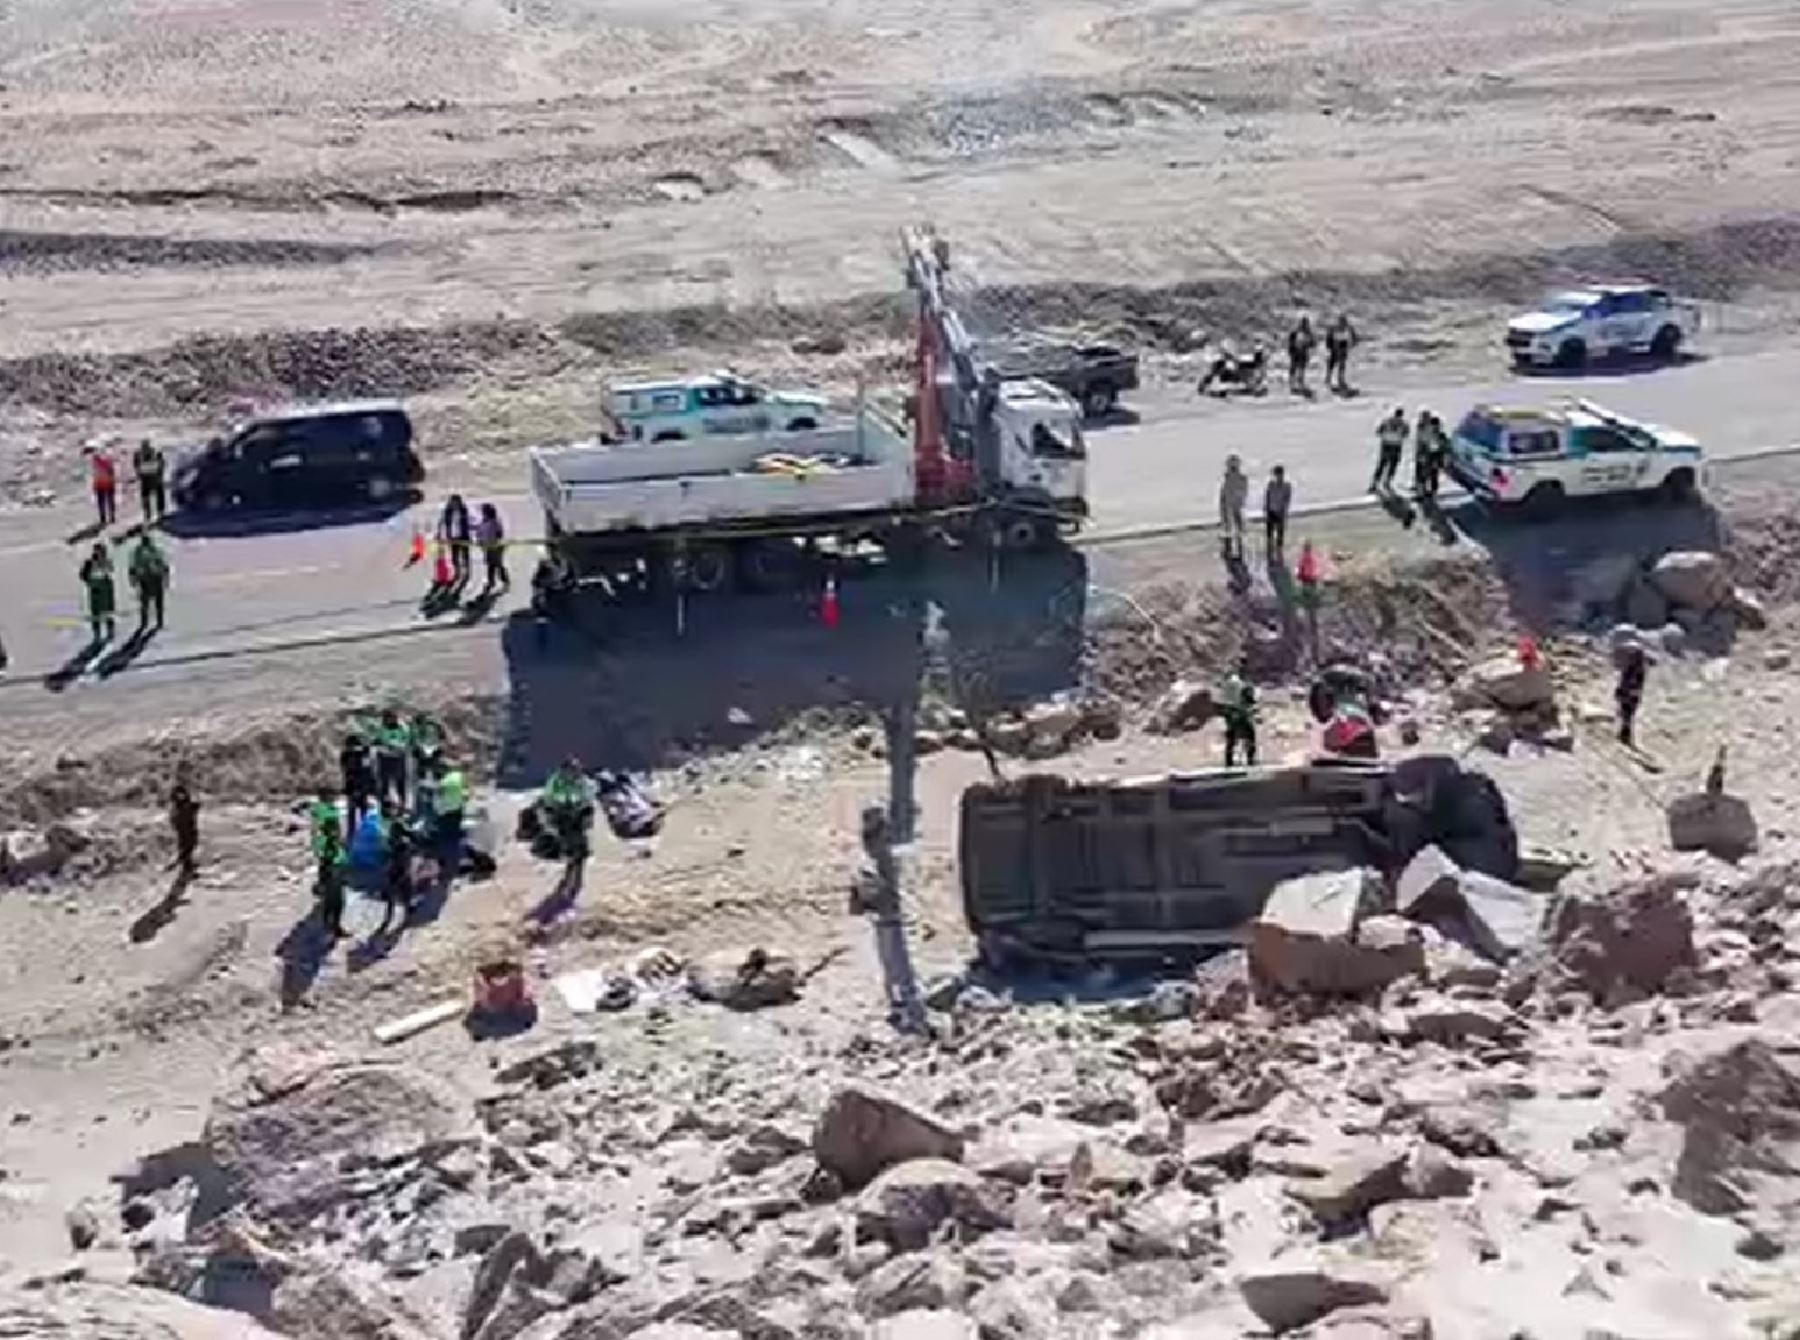 Miniván ocasiona fatal accidente en Arequipa